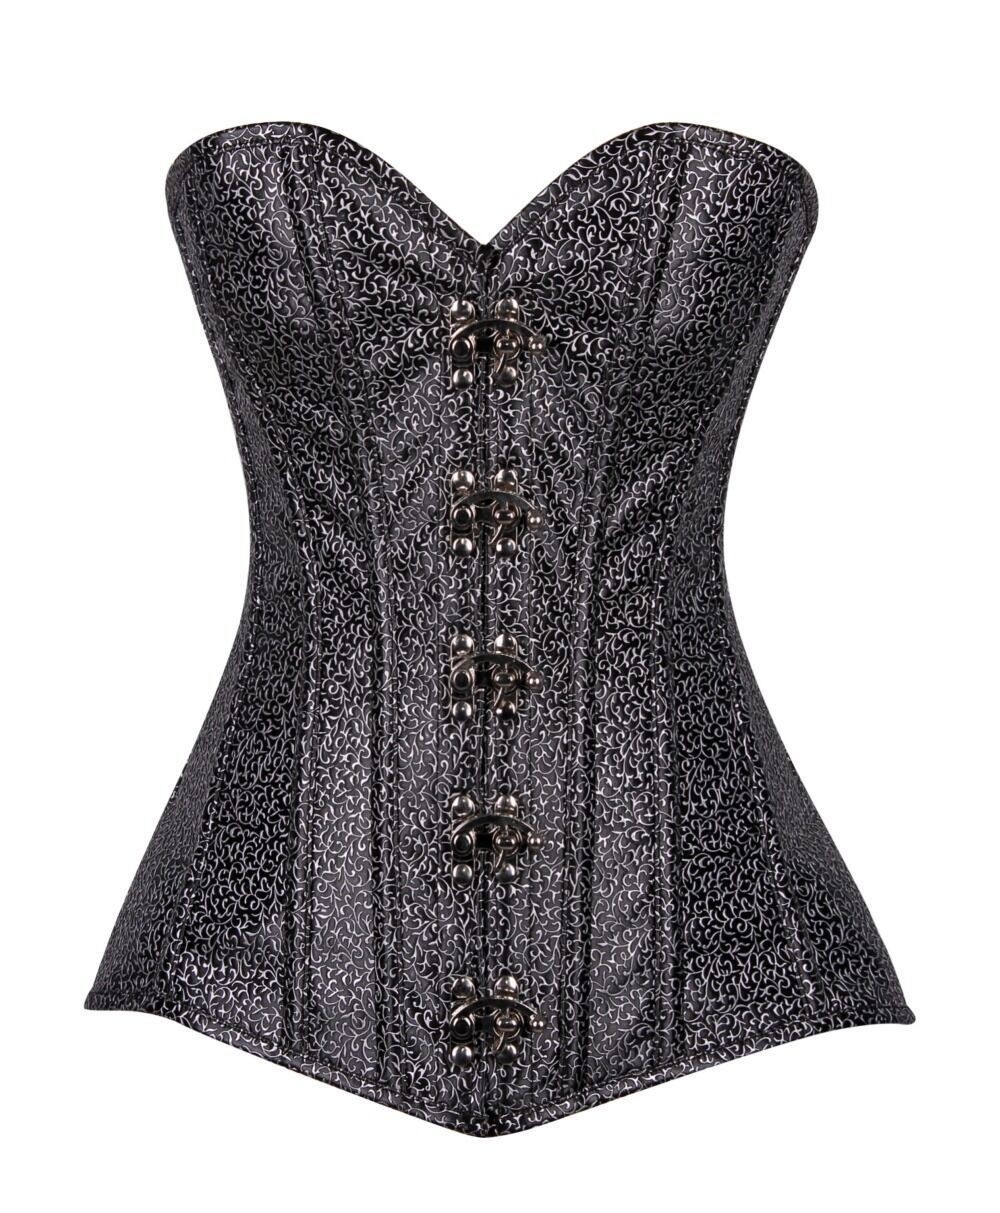 Strappless Steel Boned Faux Leather corset Black w silver